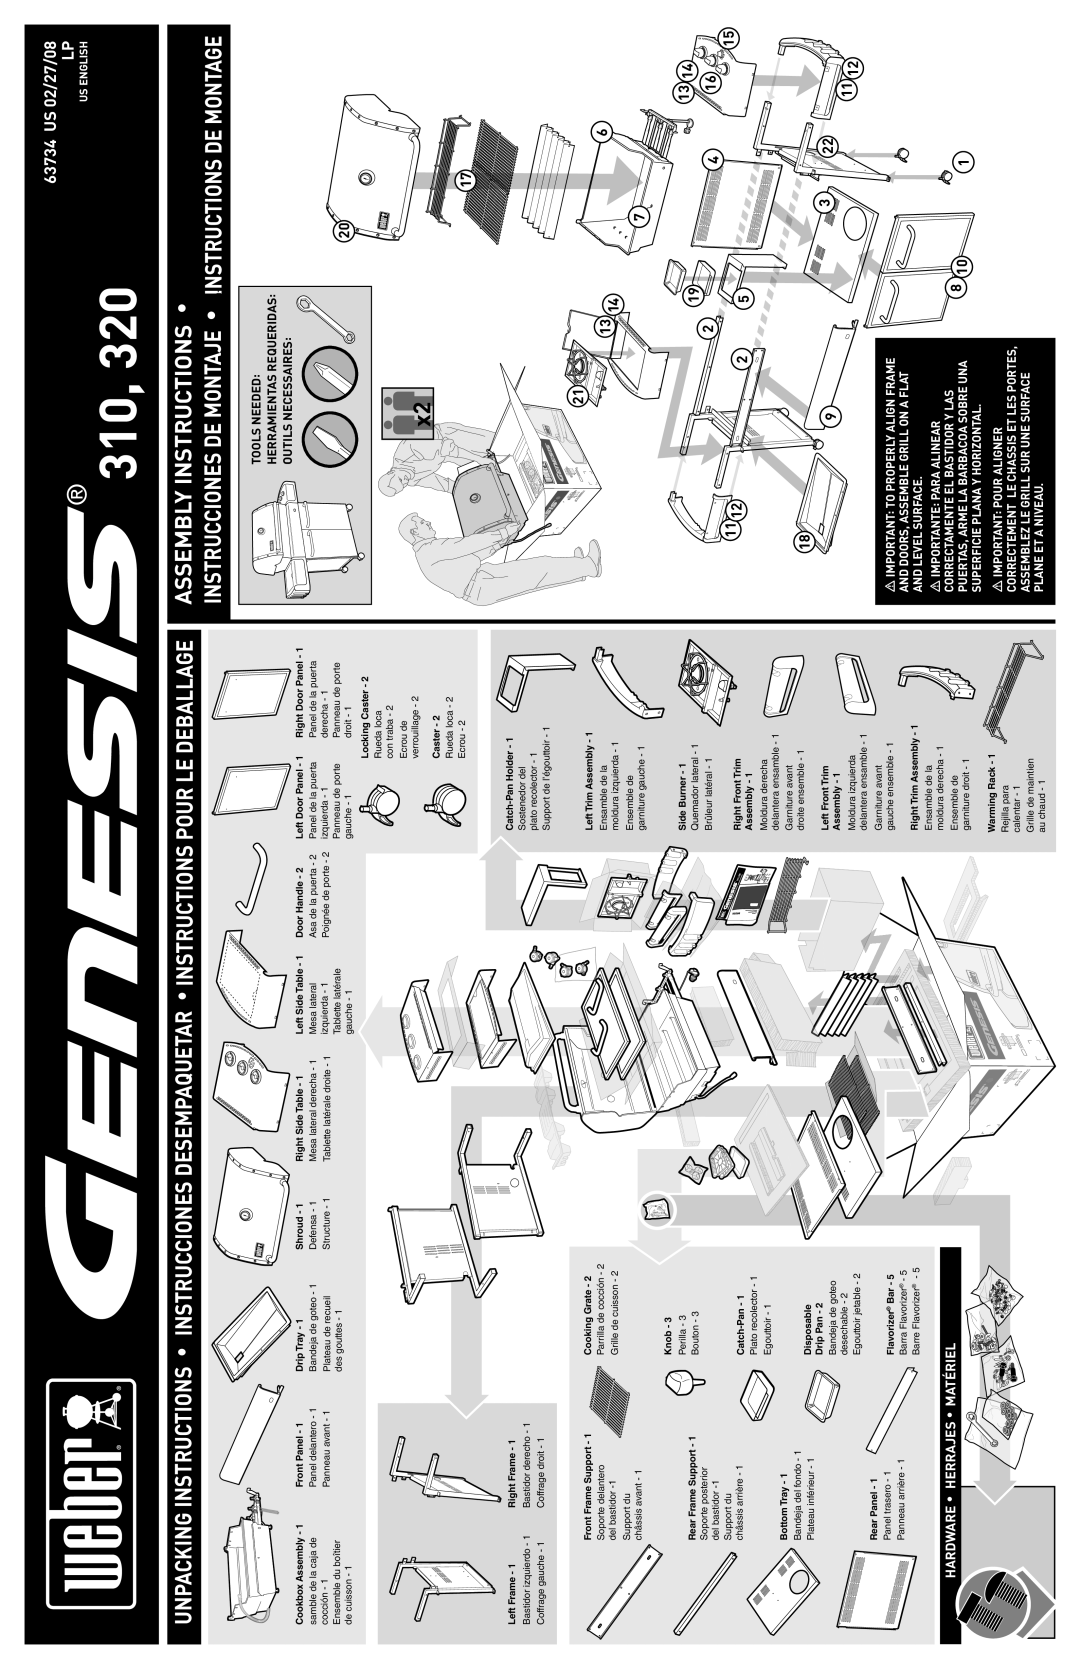 Weber 320 manual 63734 US 02/27/08 LP, 310, Assembly Instructions 